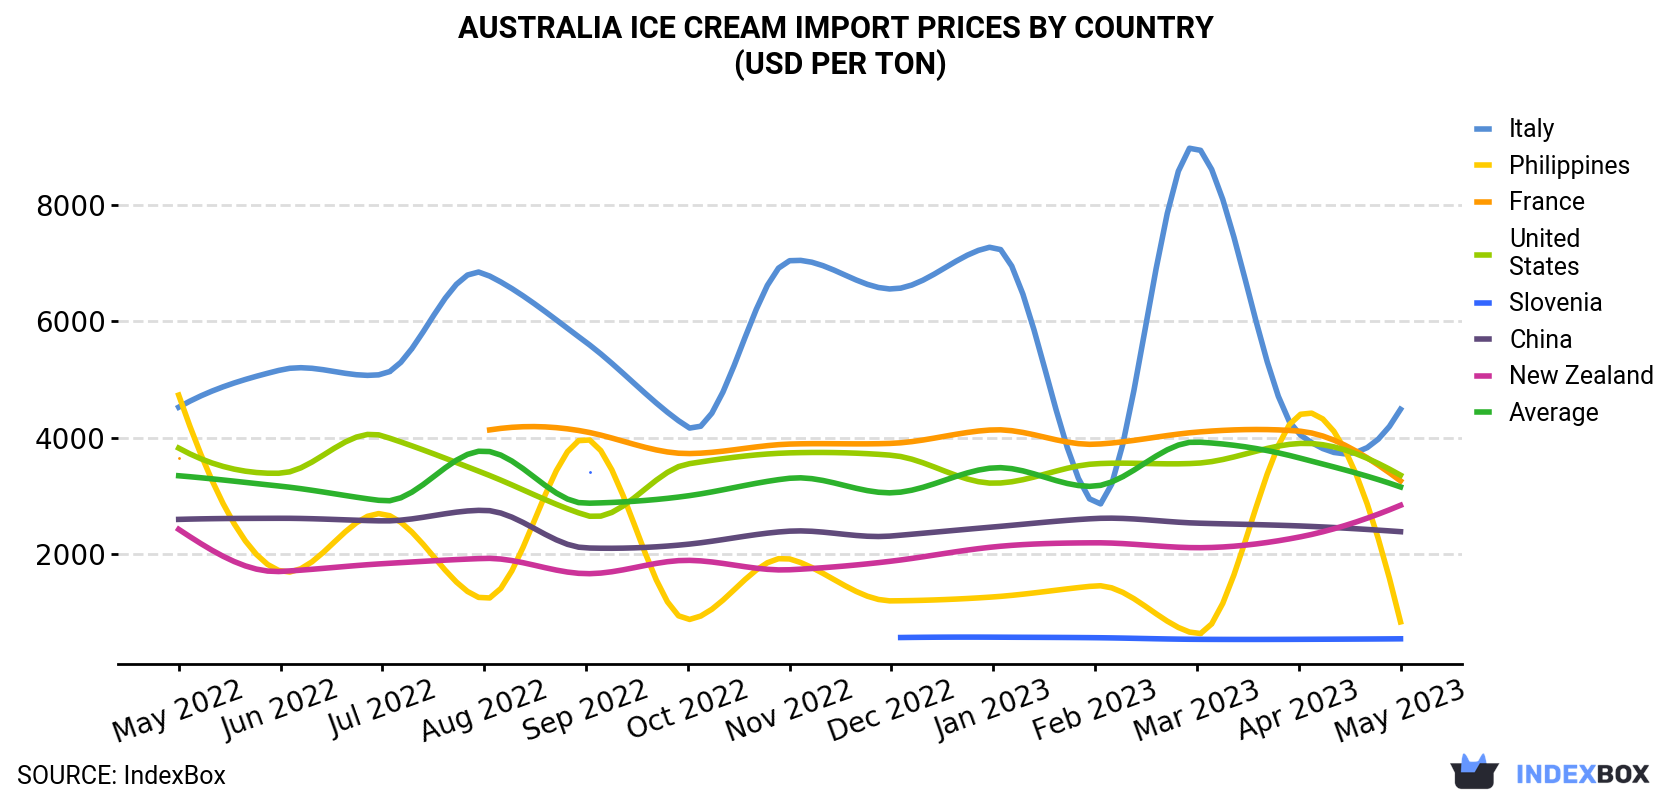 Australia Ice Cream Import Prices By Country (USD Per Ton)